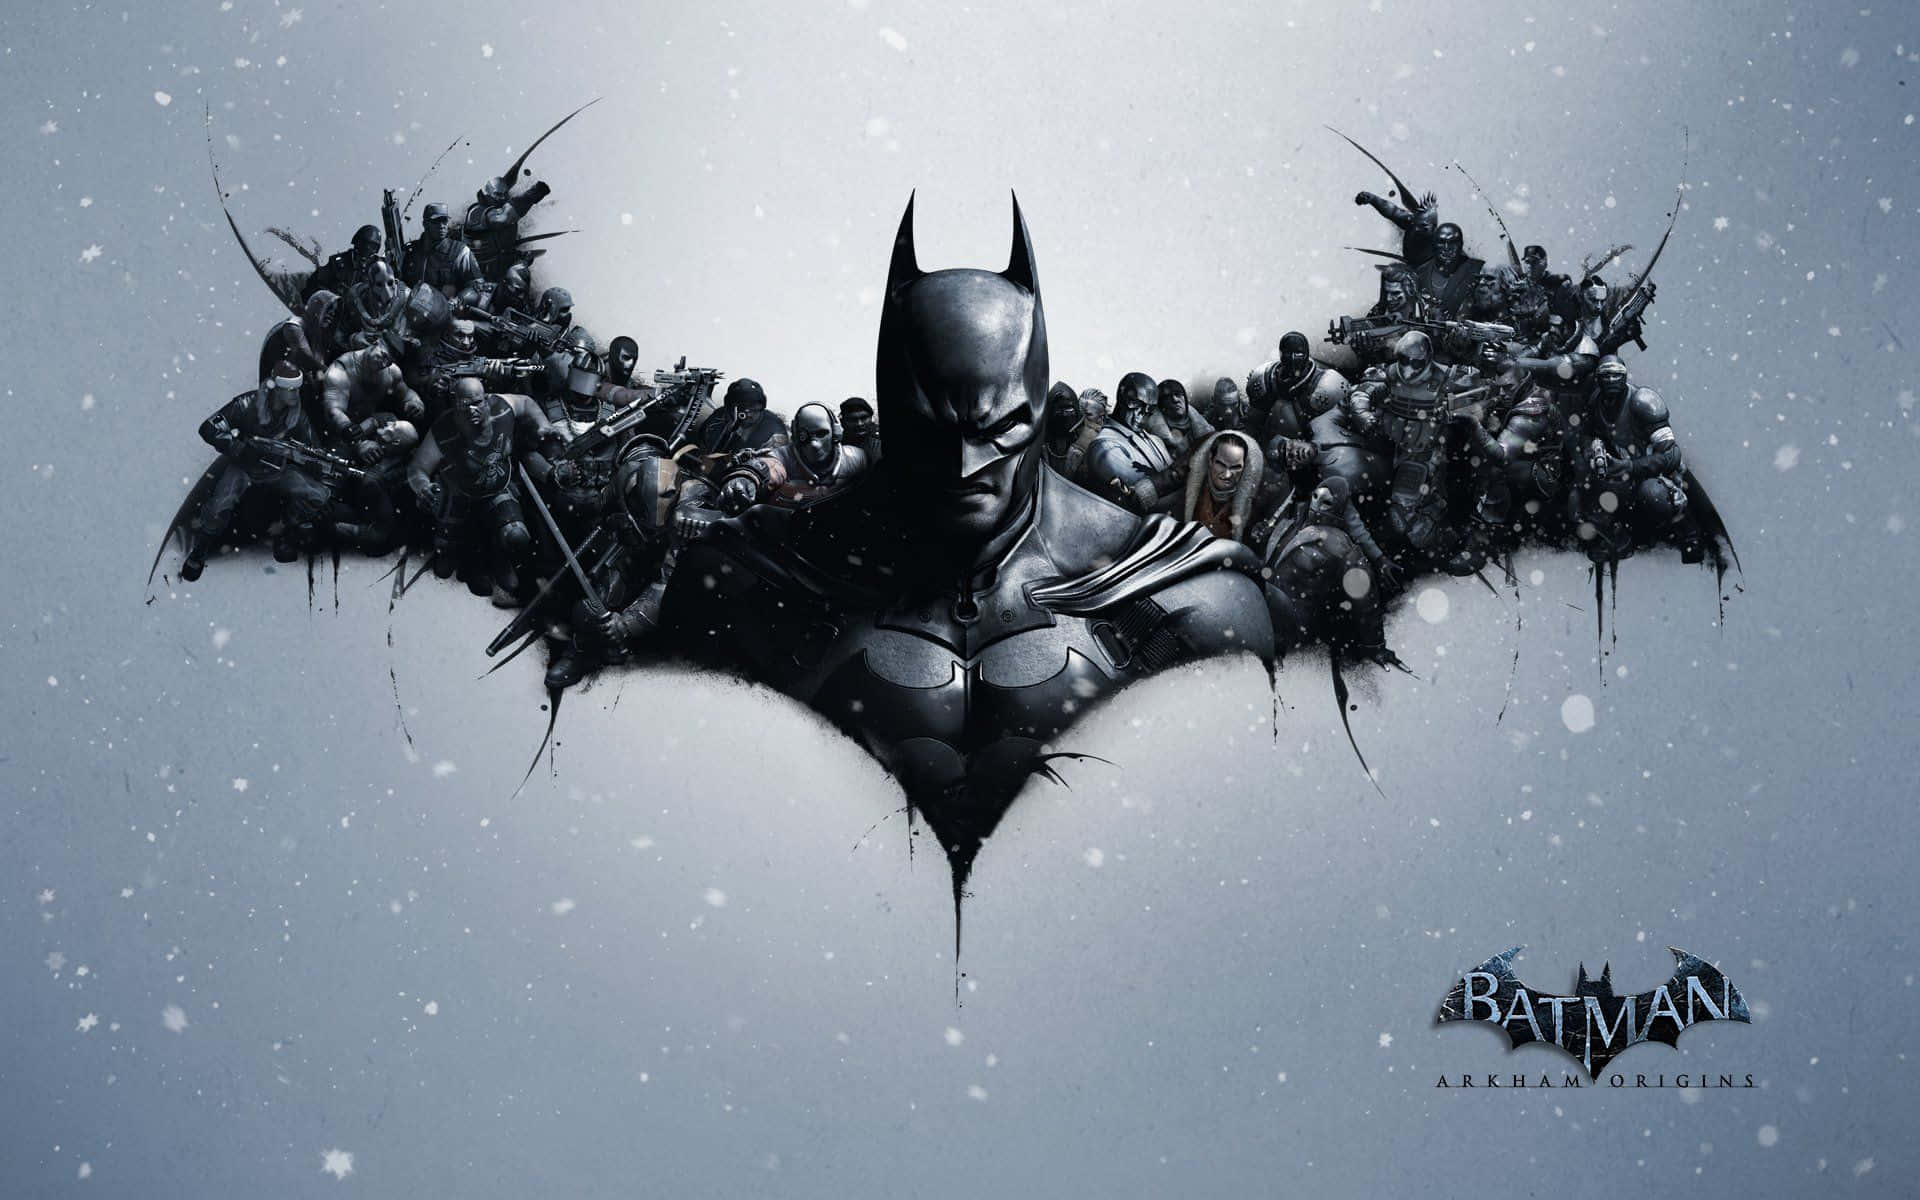 Free Batman Arkham Origins Wallpaper Downloads, [100+] Batman Arkham Origins  Wallpapers for FREE 